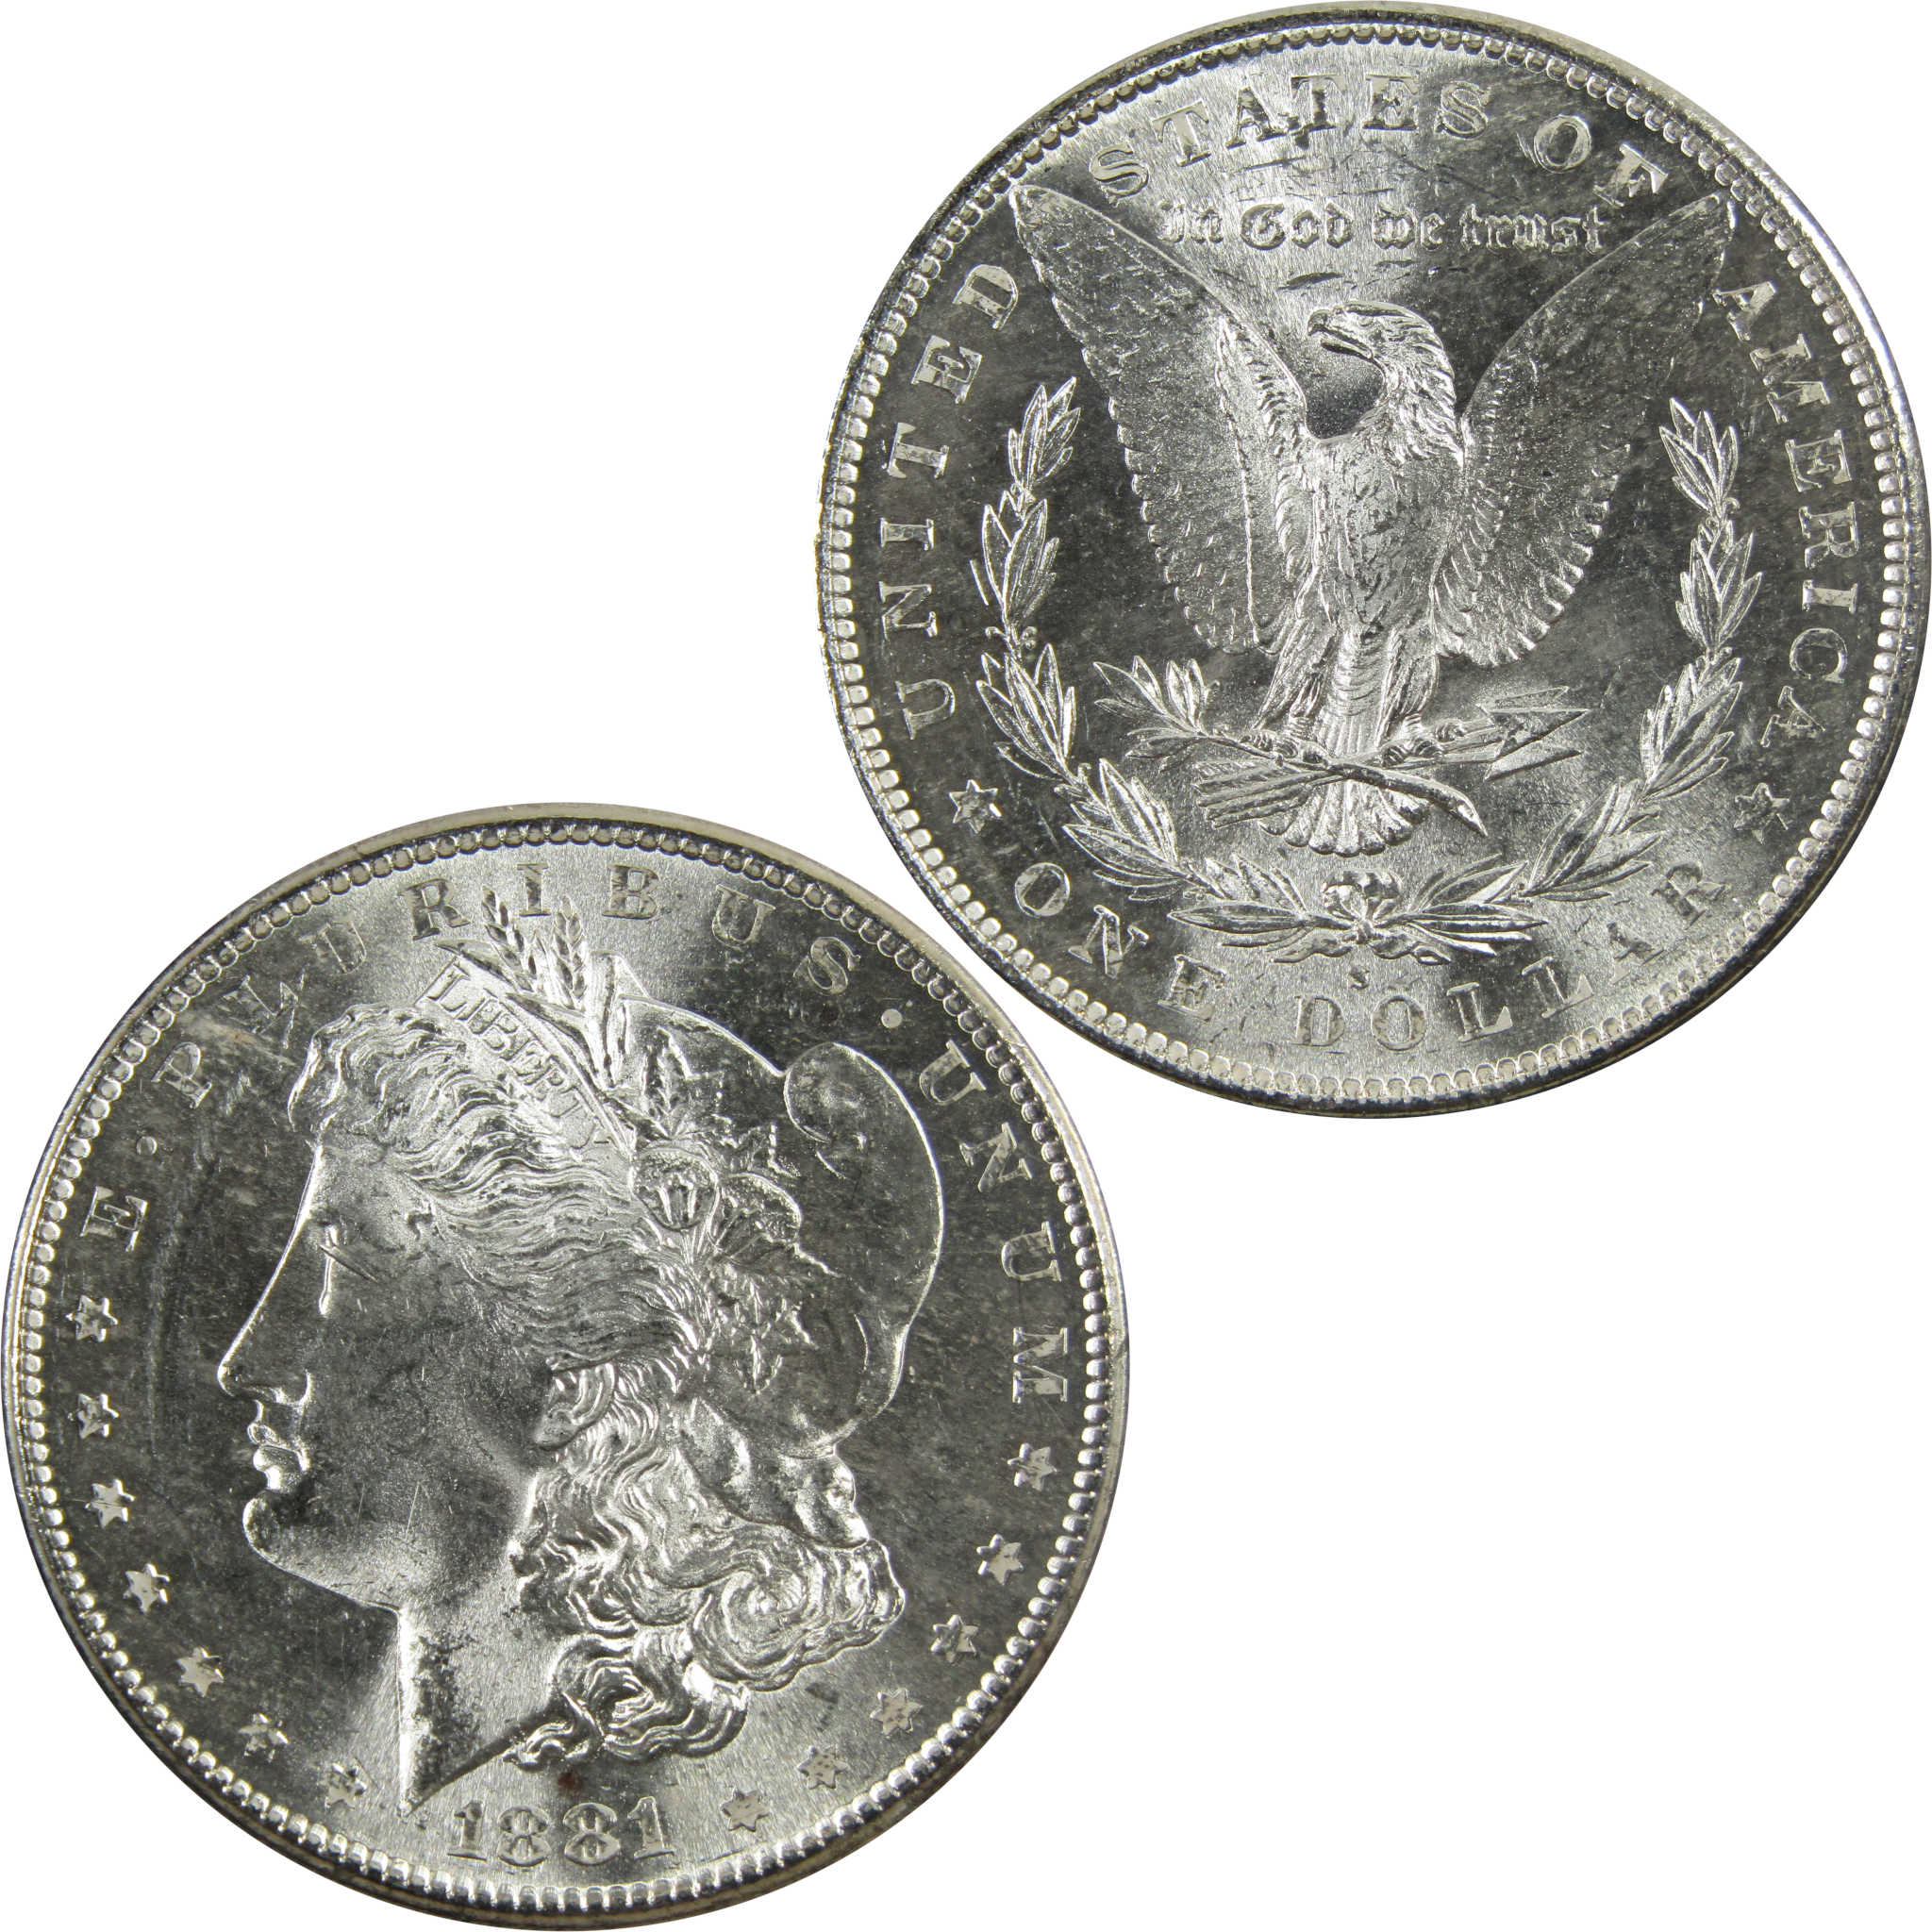 1881 S Morgan Dollar BU Uncirculated 90% Silver $1 Coin SKU:I5298 - Morgan coin - Morgan silver dollar - Morgan silver dollar for sale - Profile Coins &amp; Collectibles